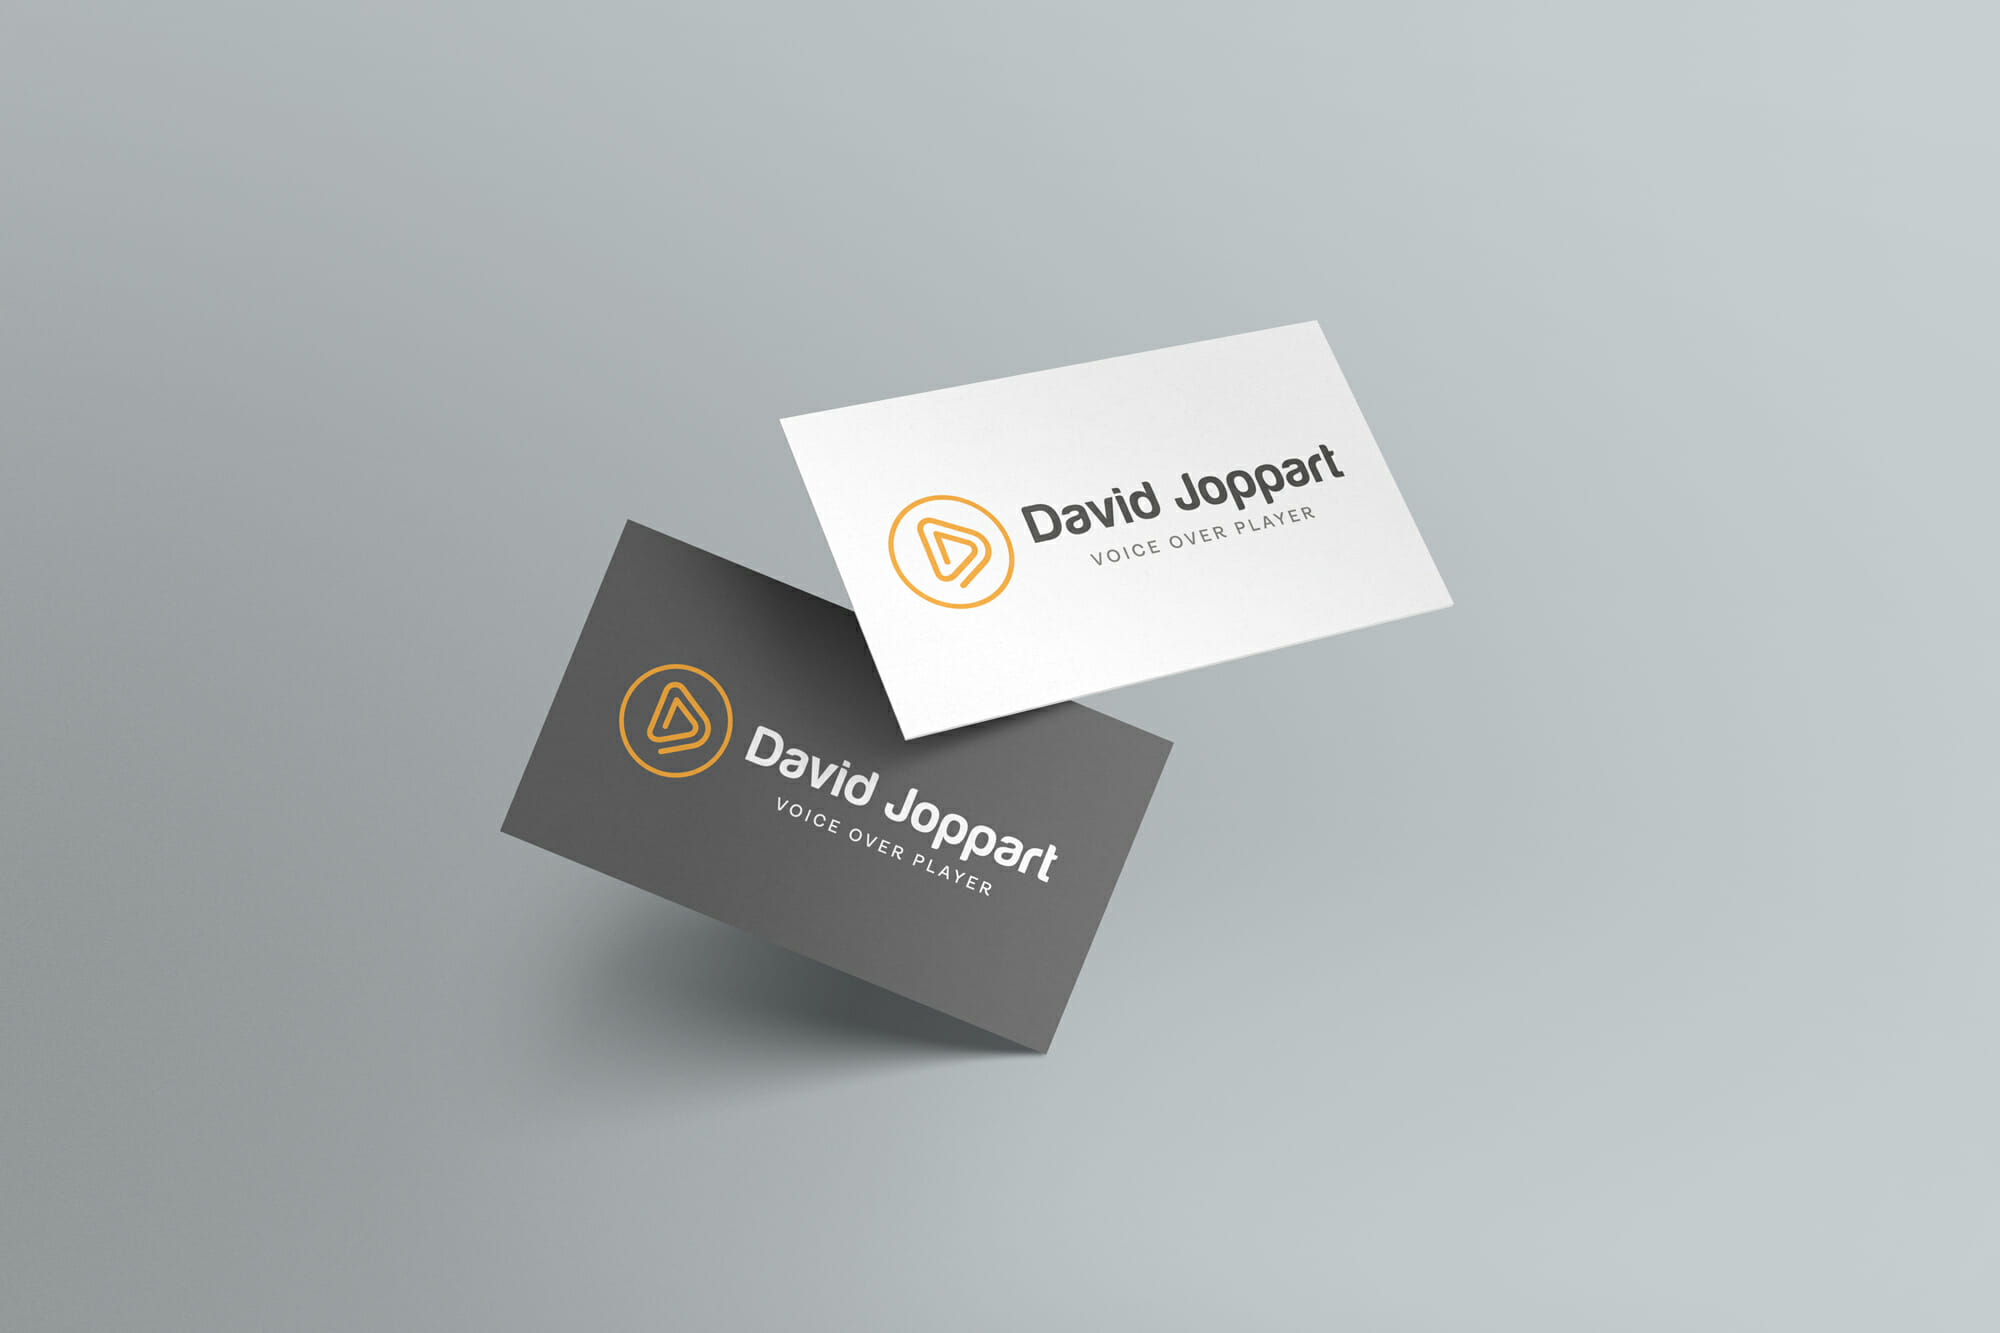 David joppart logo simpl-Simpl. SRL is a graphic design studio in Brussels